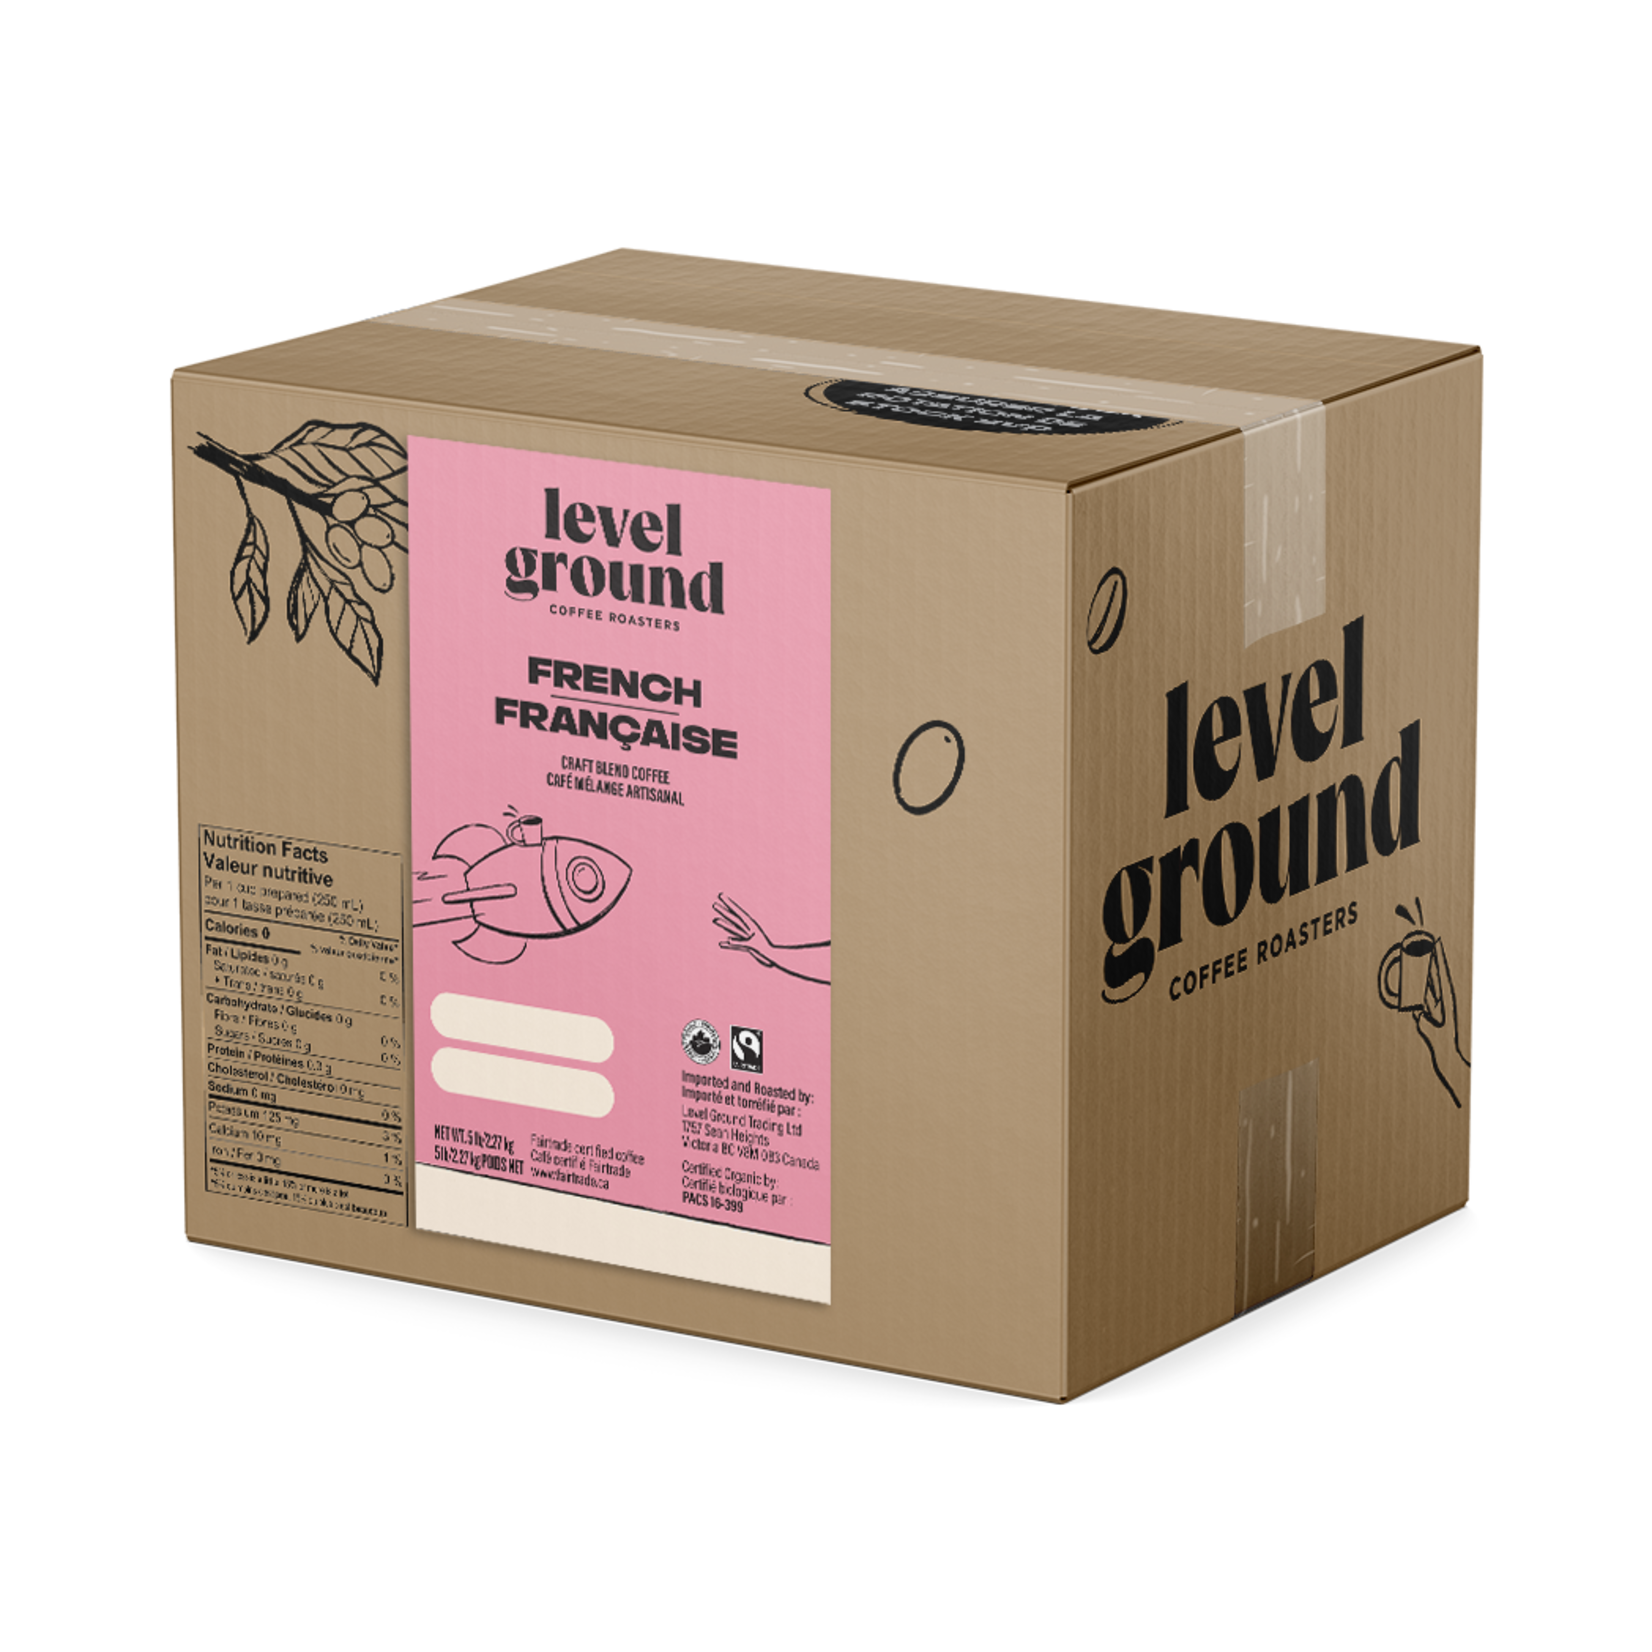 Level Ground Coffee - Level Ground French Roast Bean -5lb Box